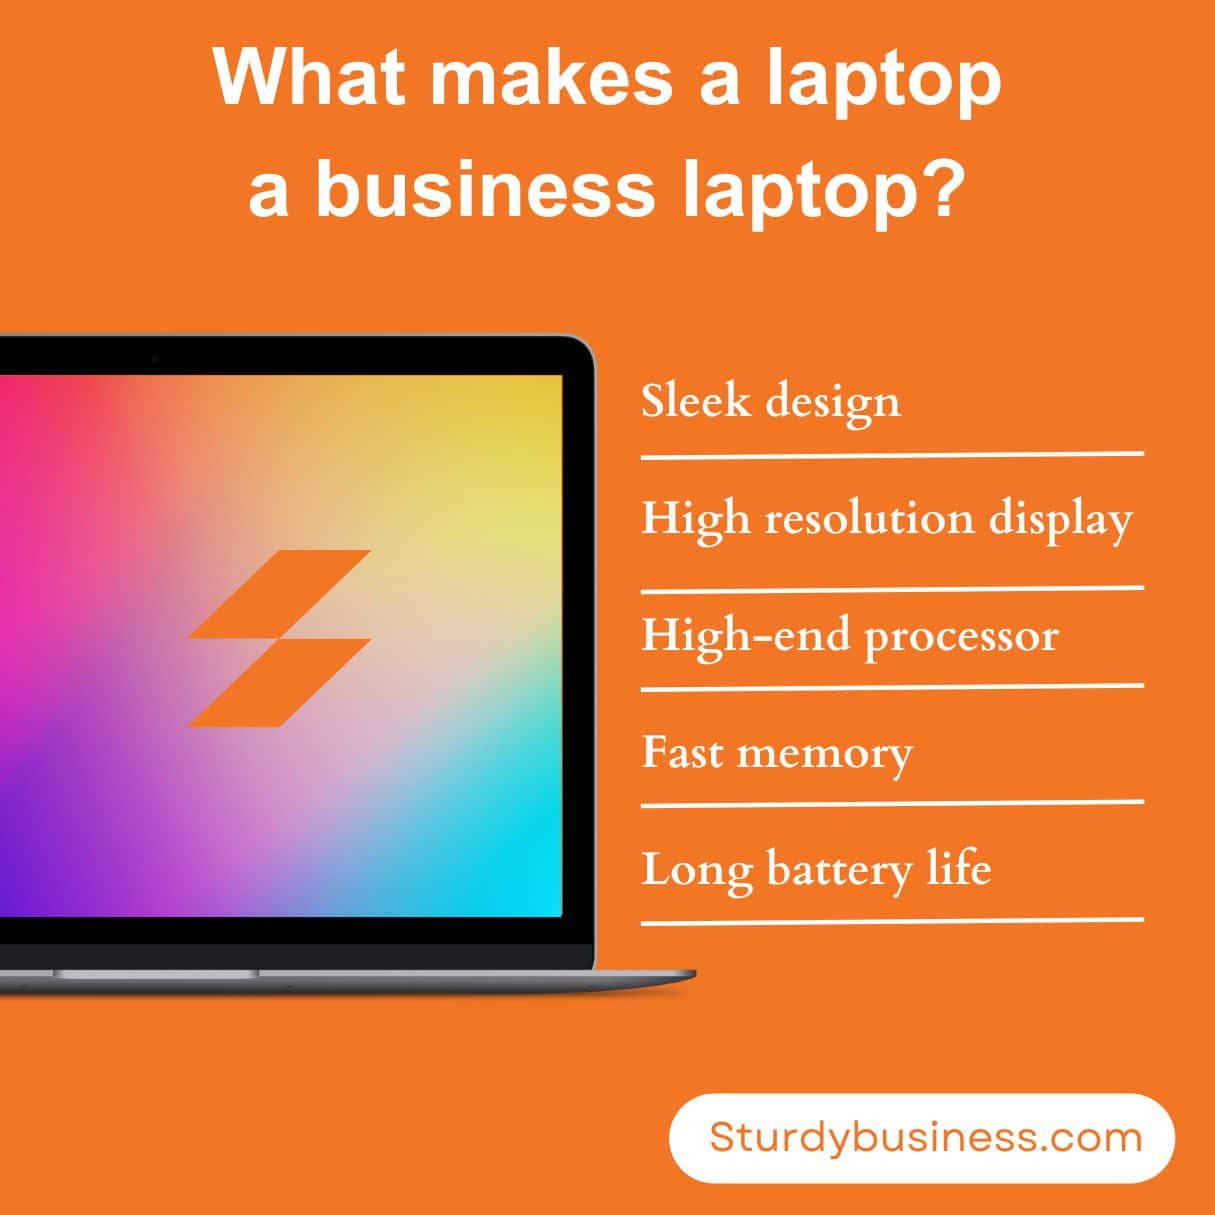 What makes a laptop a business laptop?